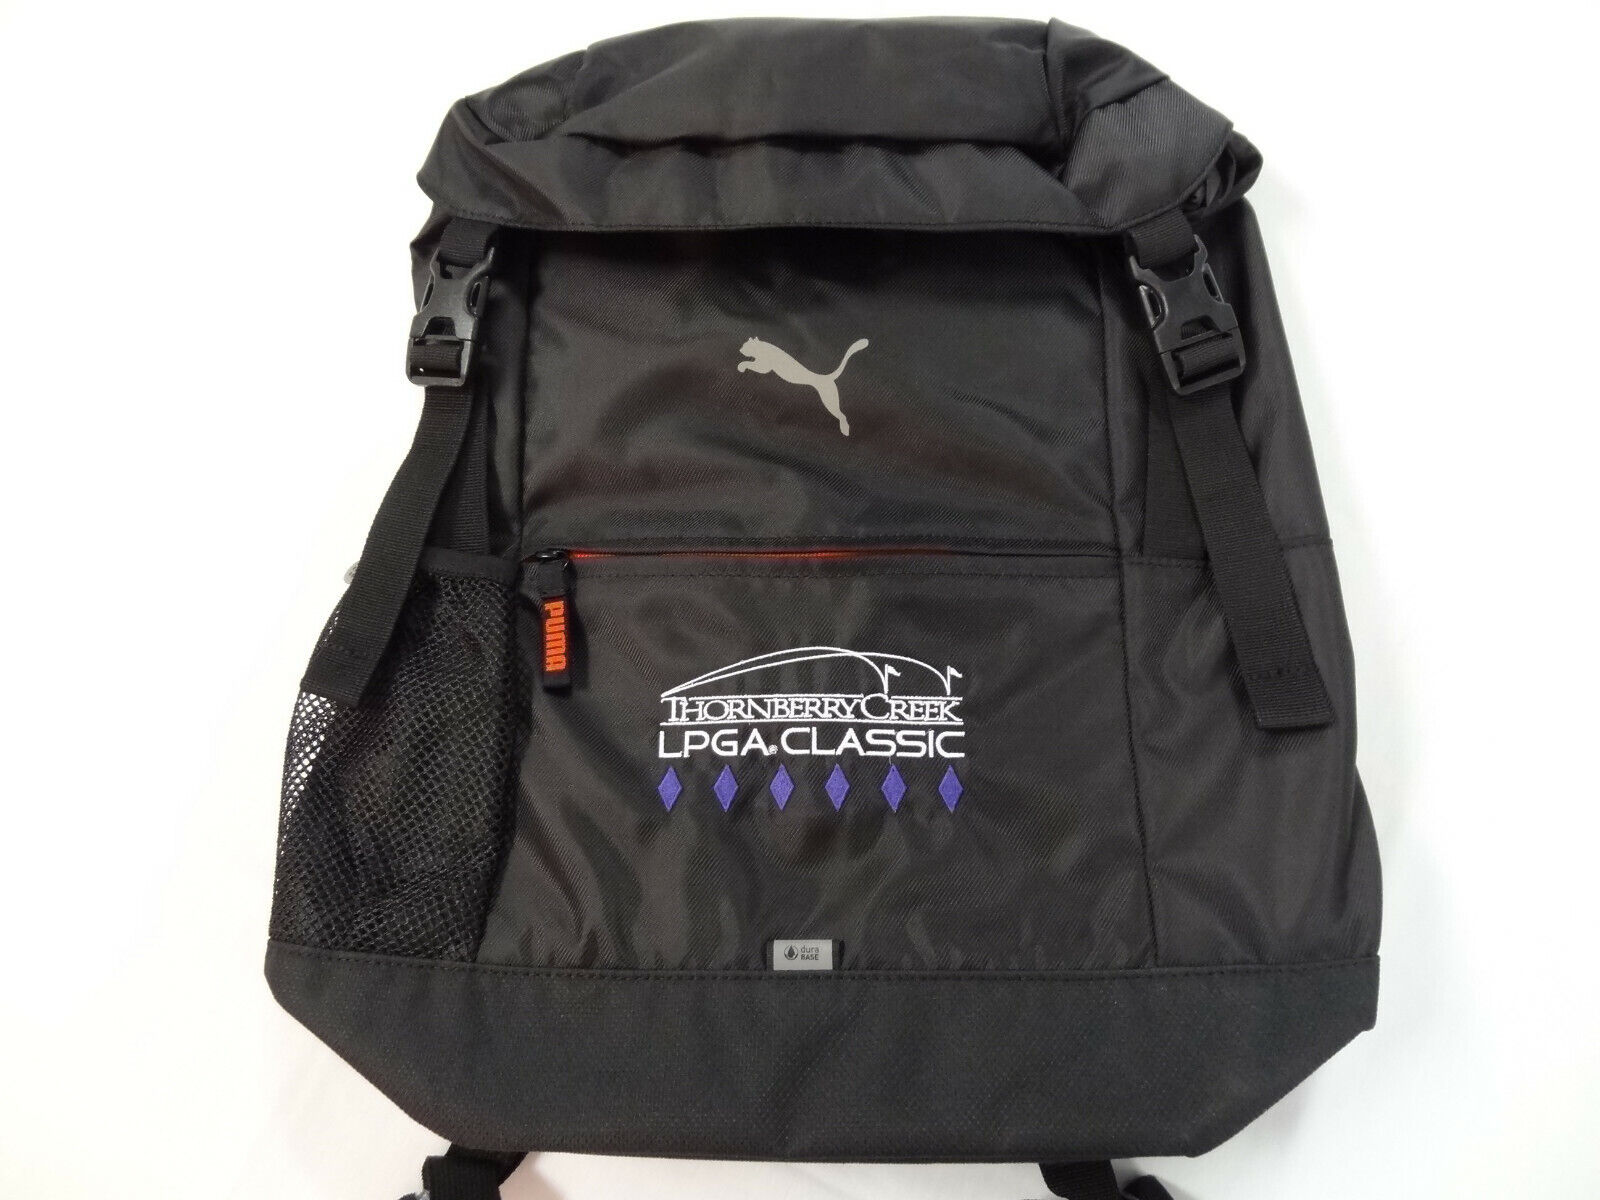 Puma Backpack "LPGA Classic - Thornberry Creek" Black NEW 11244